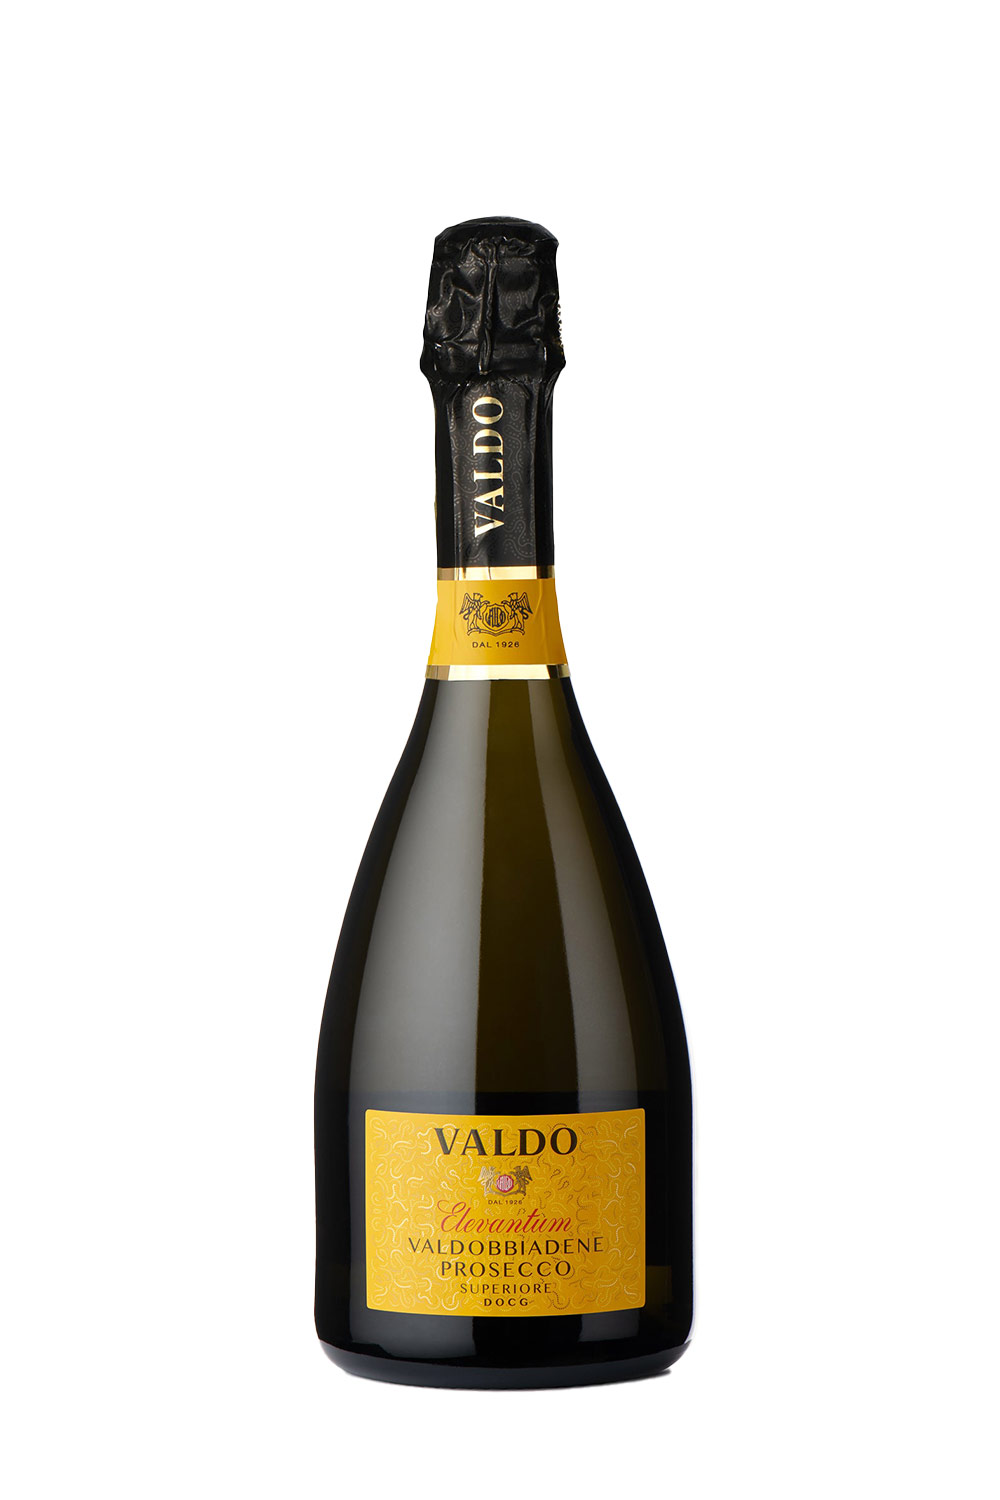 Senti Superiore aus Elevantum kaufen bei Online DOCG Valdo Prosecco - Weine Italien Valdobbiadene Vini |